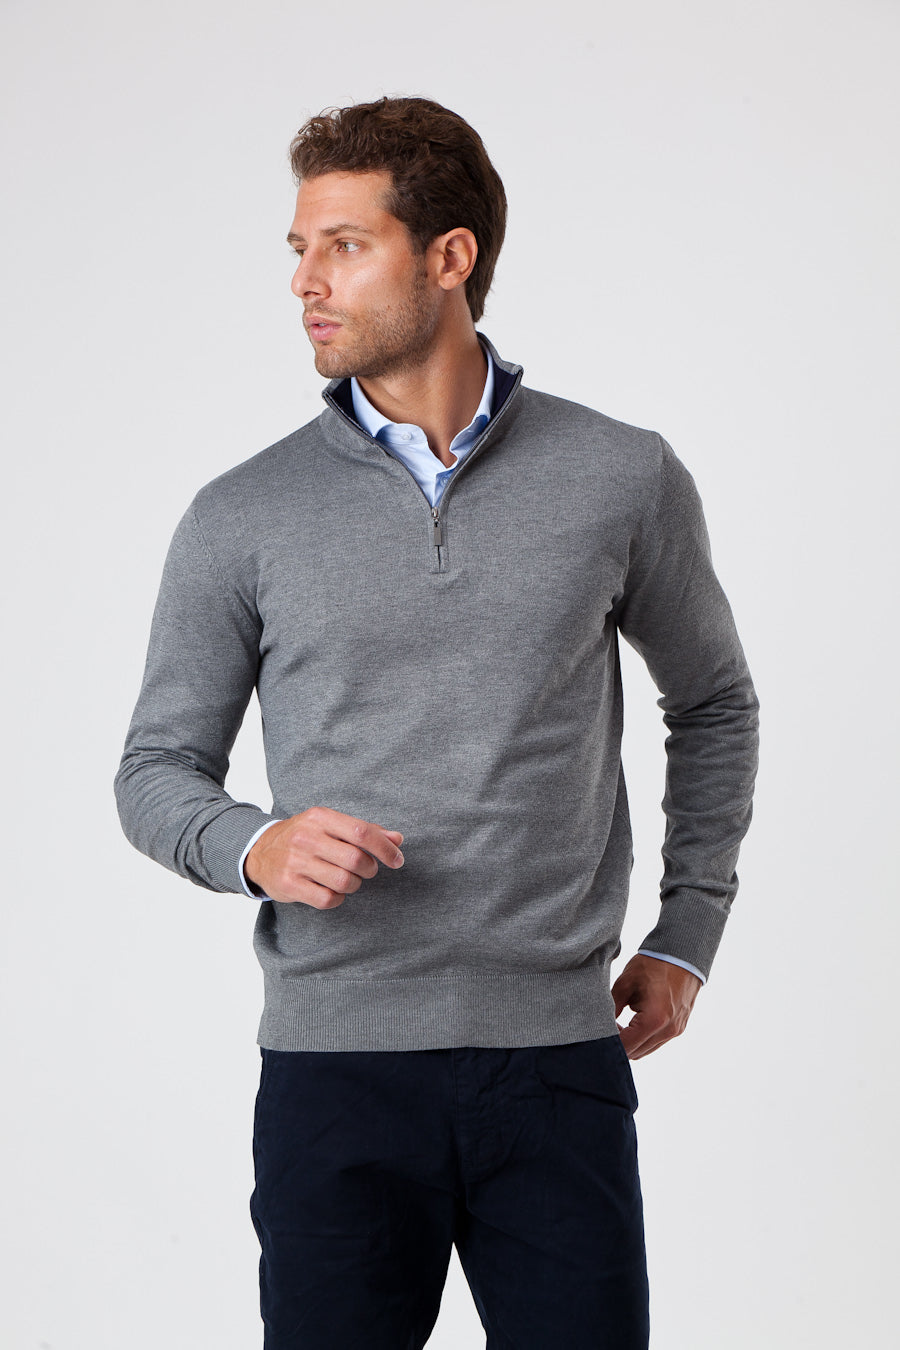 Premium Cashmere and Merino sweater